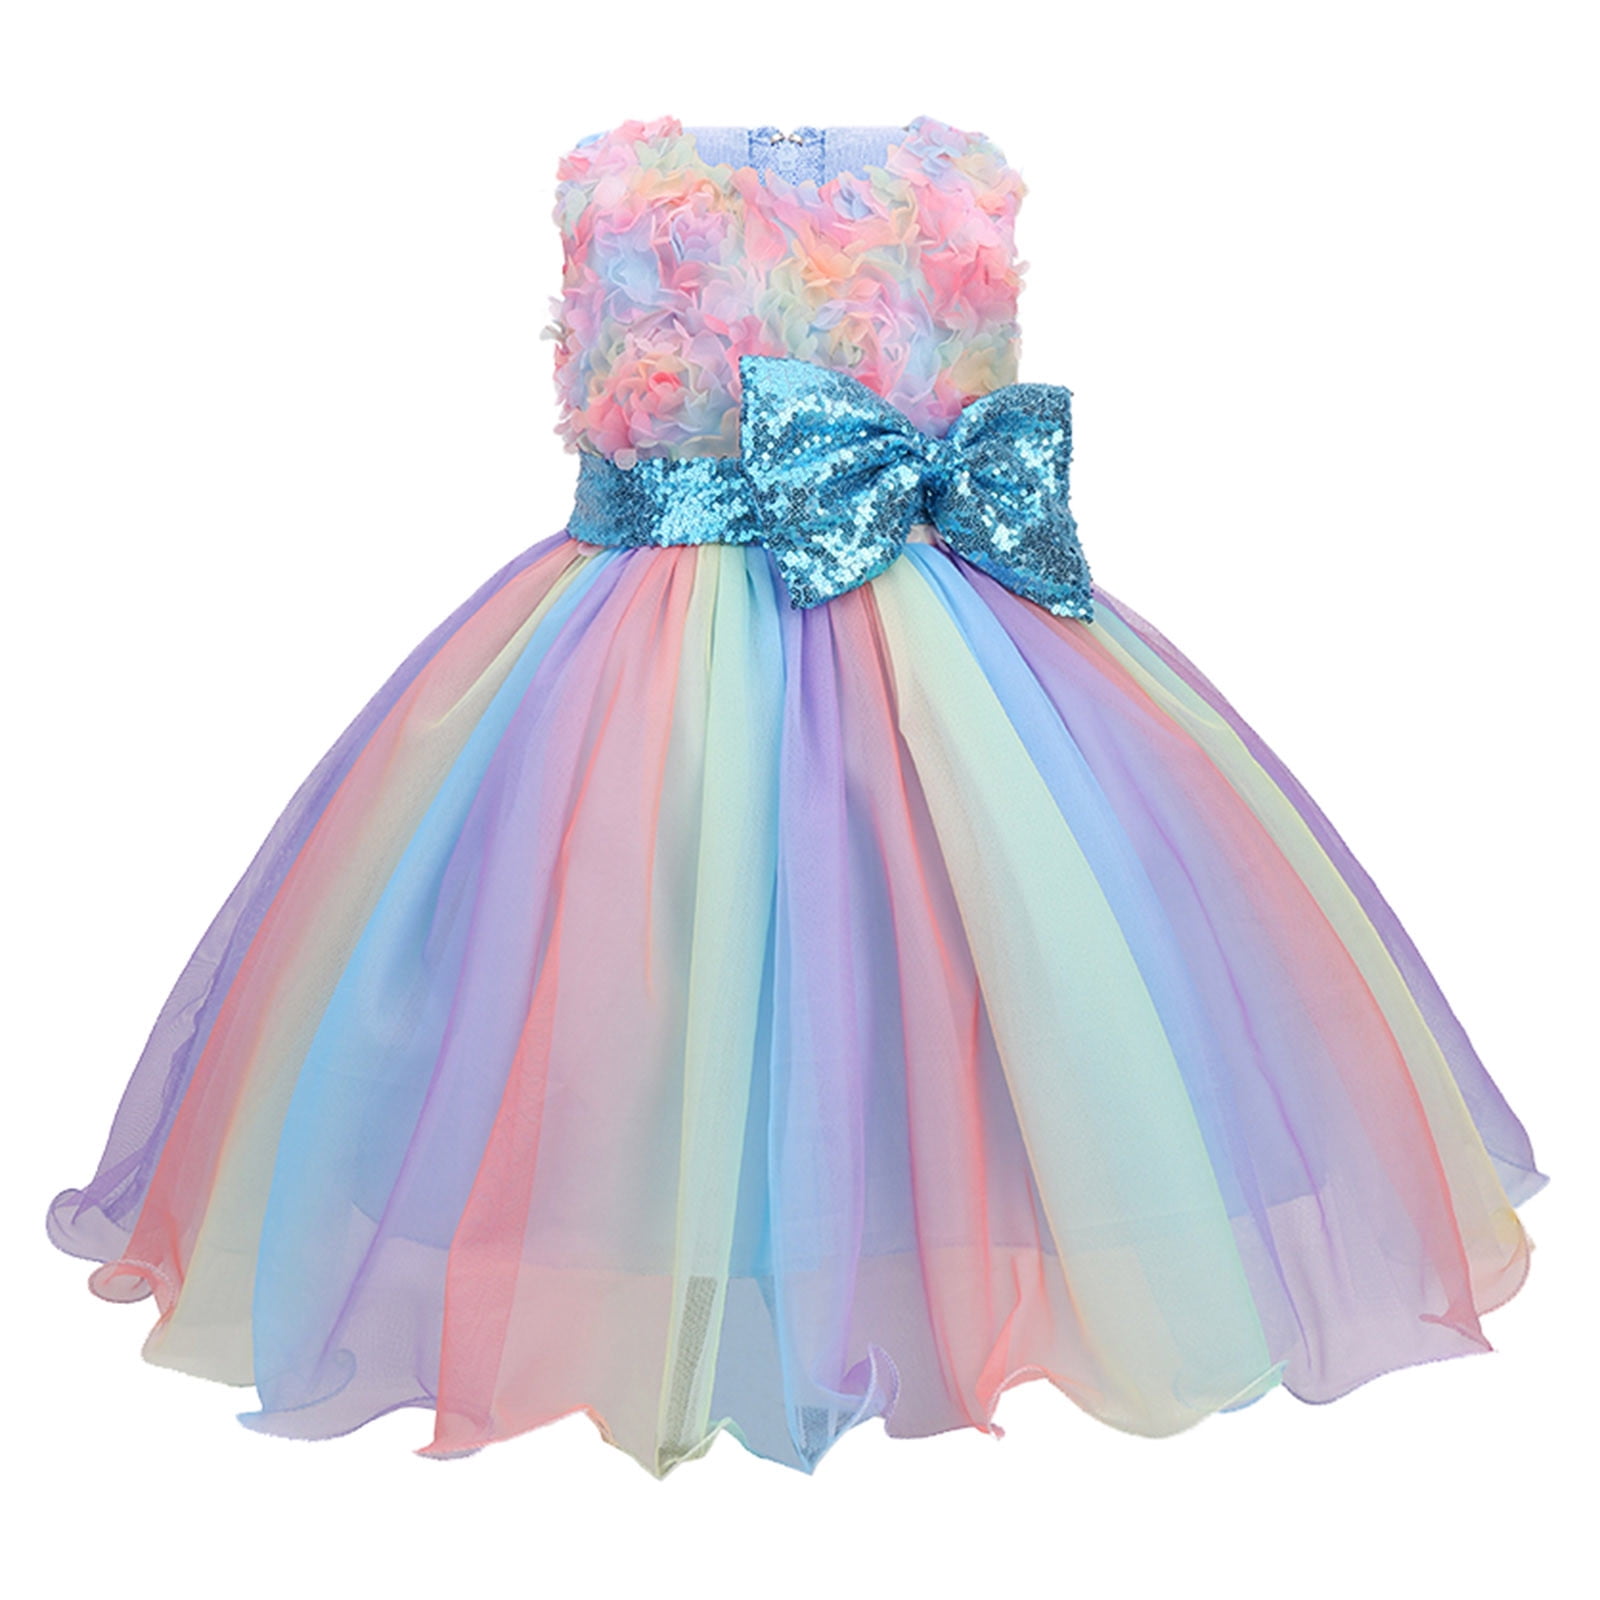 QYZEU Girls Dresses 7 16 Flannel Dress Princess Gown Tulle Birthday Party Wedding Bowknot Kids Paillette Pageant Dress Skirt 3e7dea5e bf5e 46ae 84c0 0c2b59fd9f63.b8c0bd0b09b6808a7ca8147e4520bd68